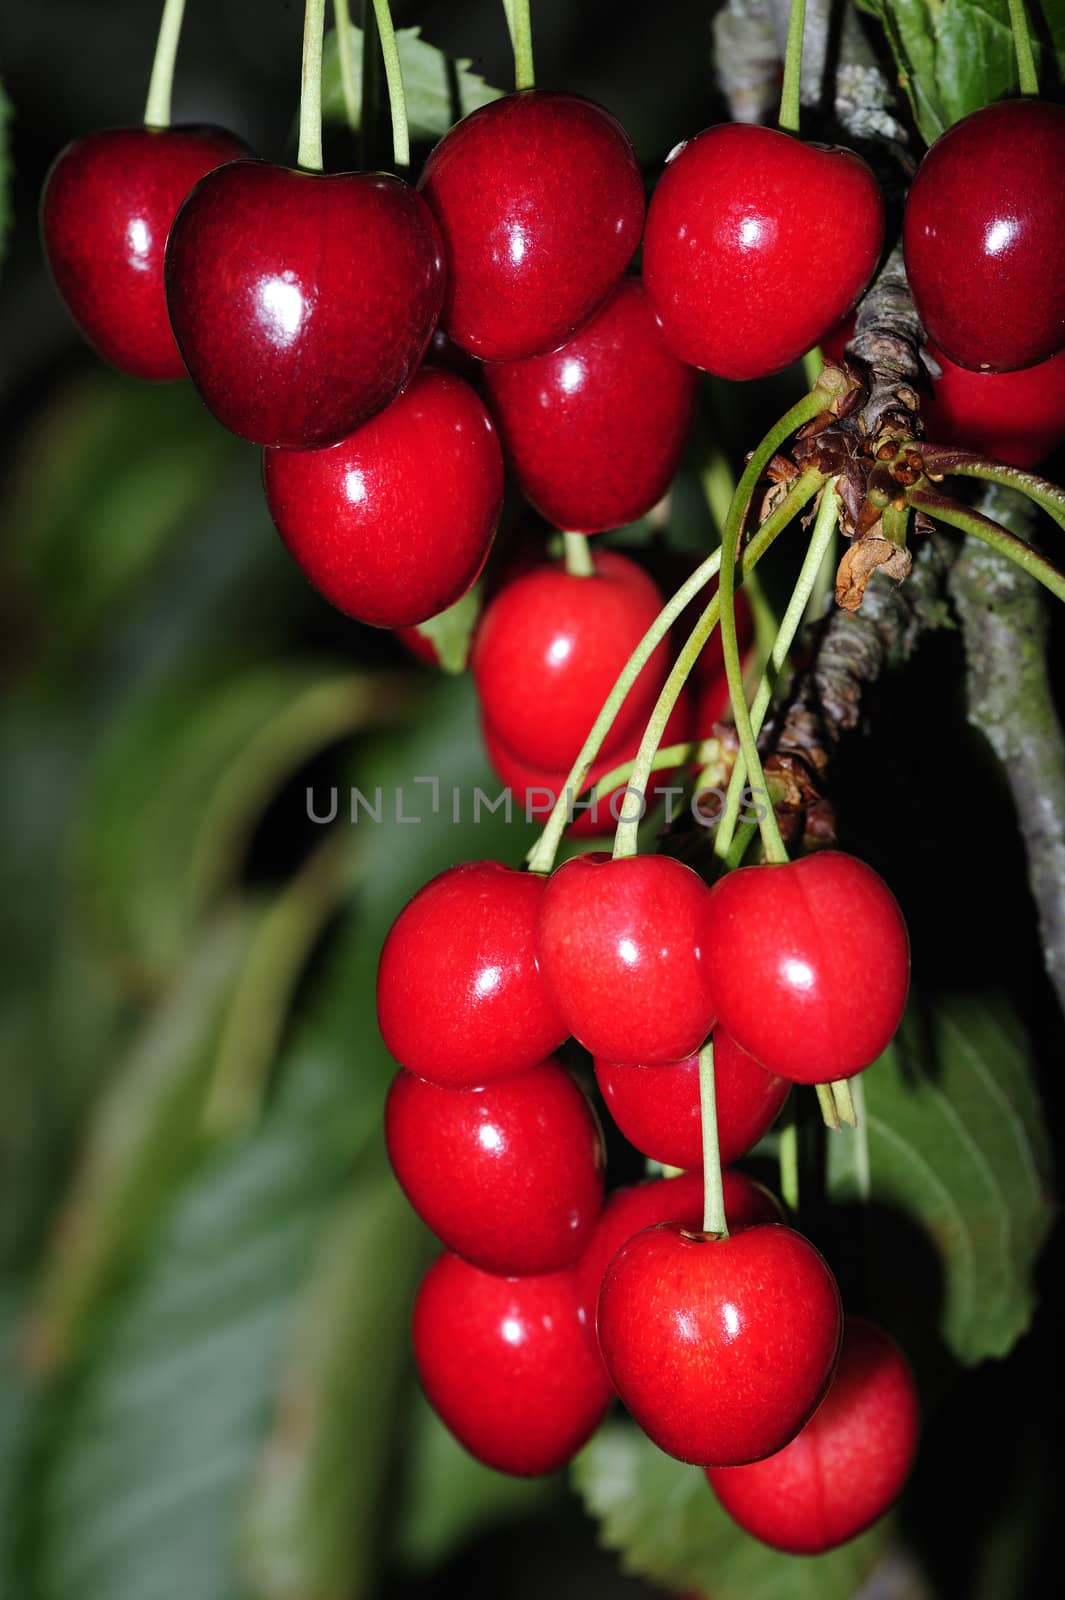 Cherries on the tree by Bateleur